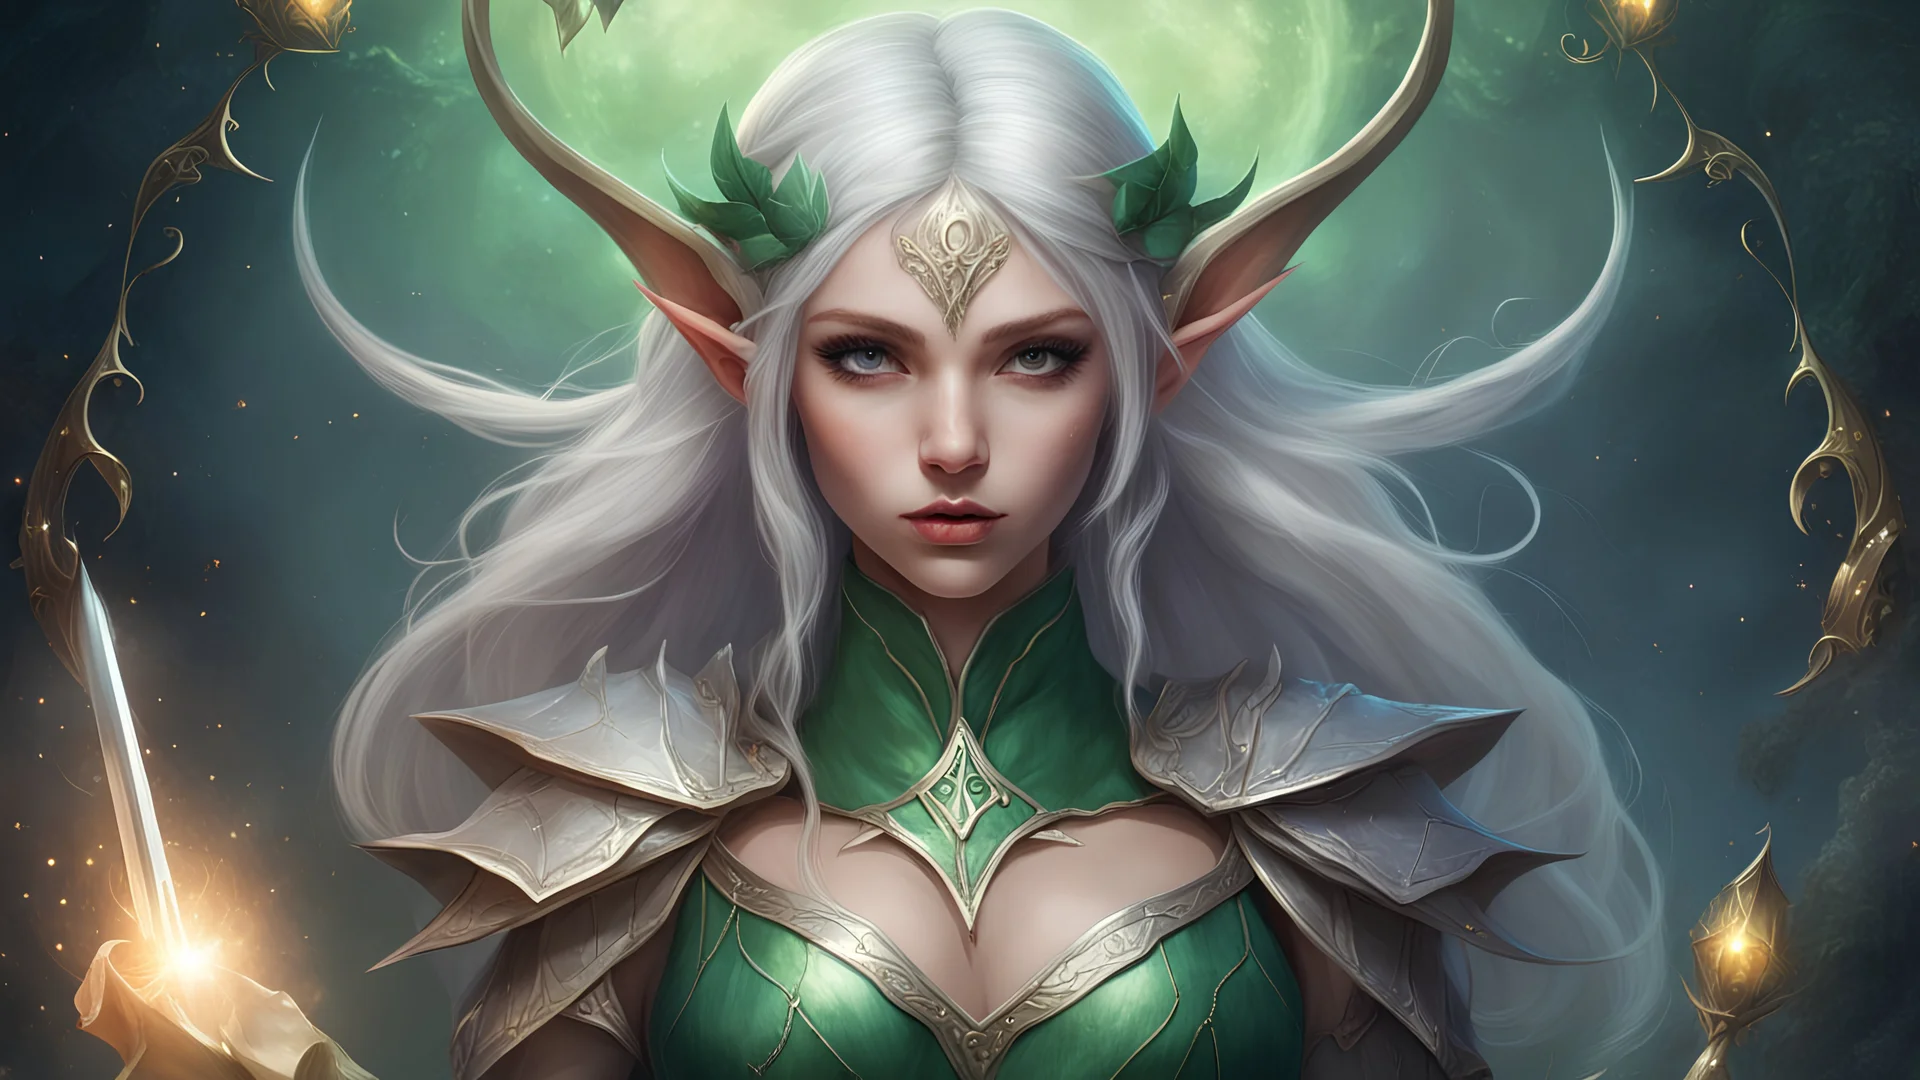 Cover in fantasy style. Elf girl. Write logo ERAZE